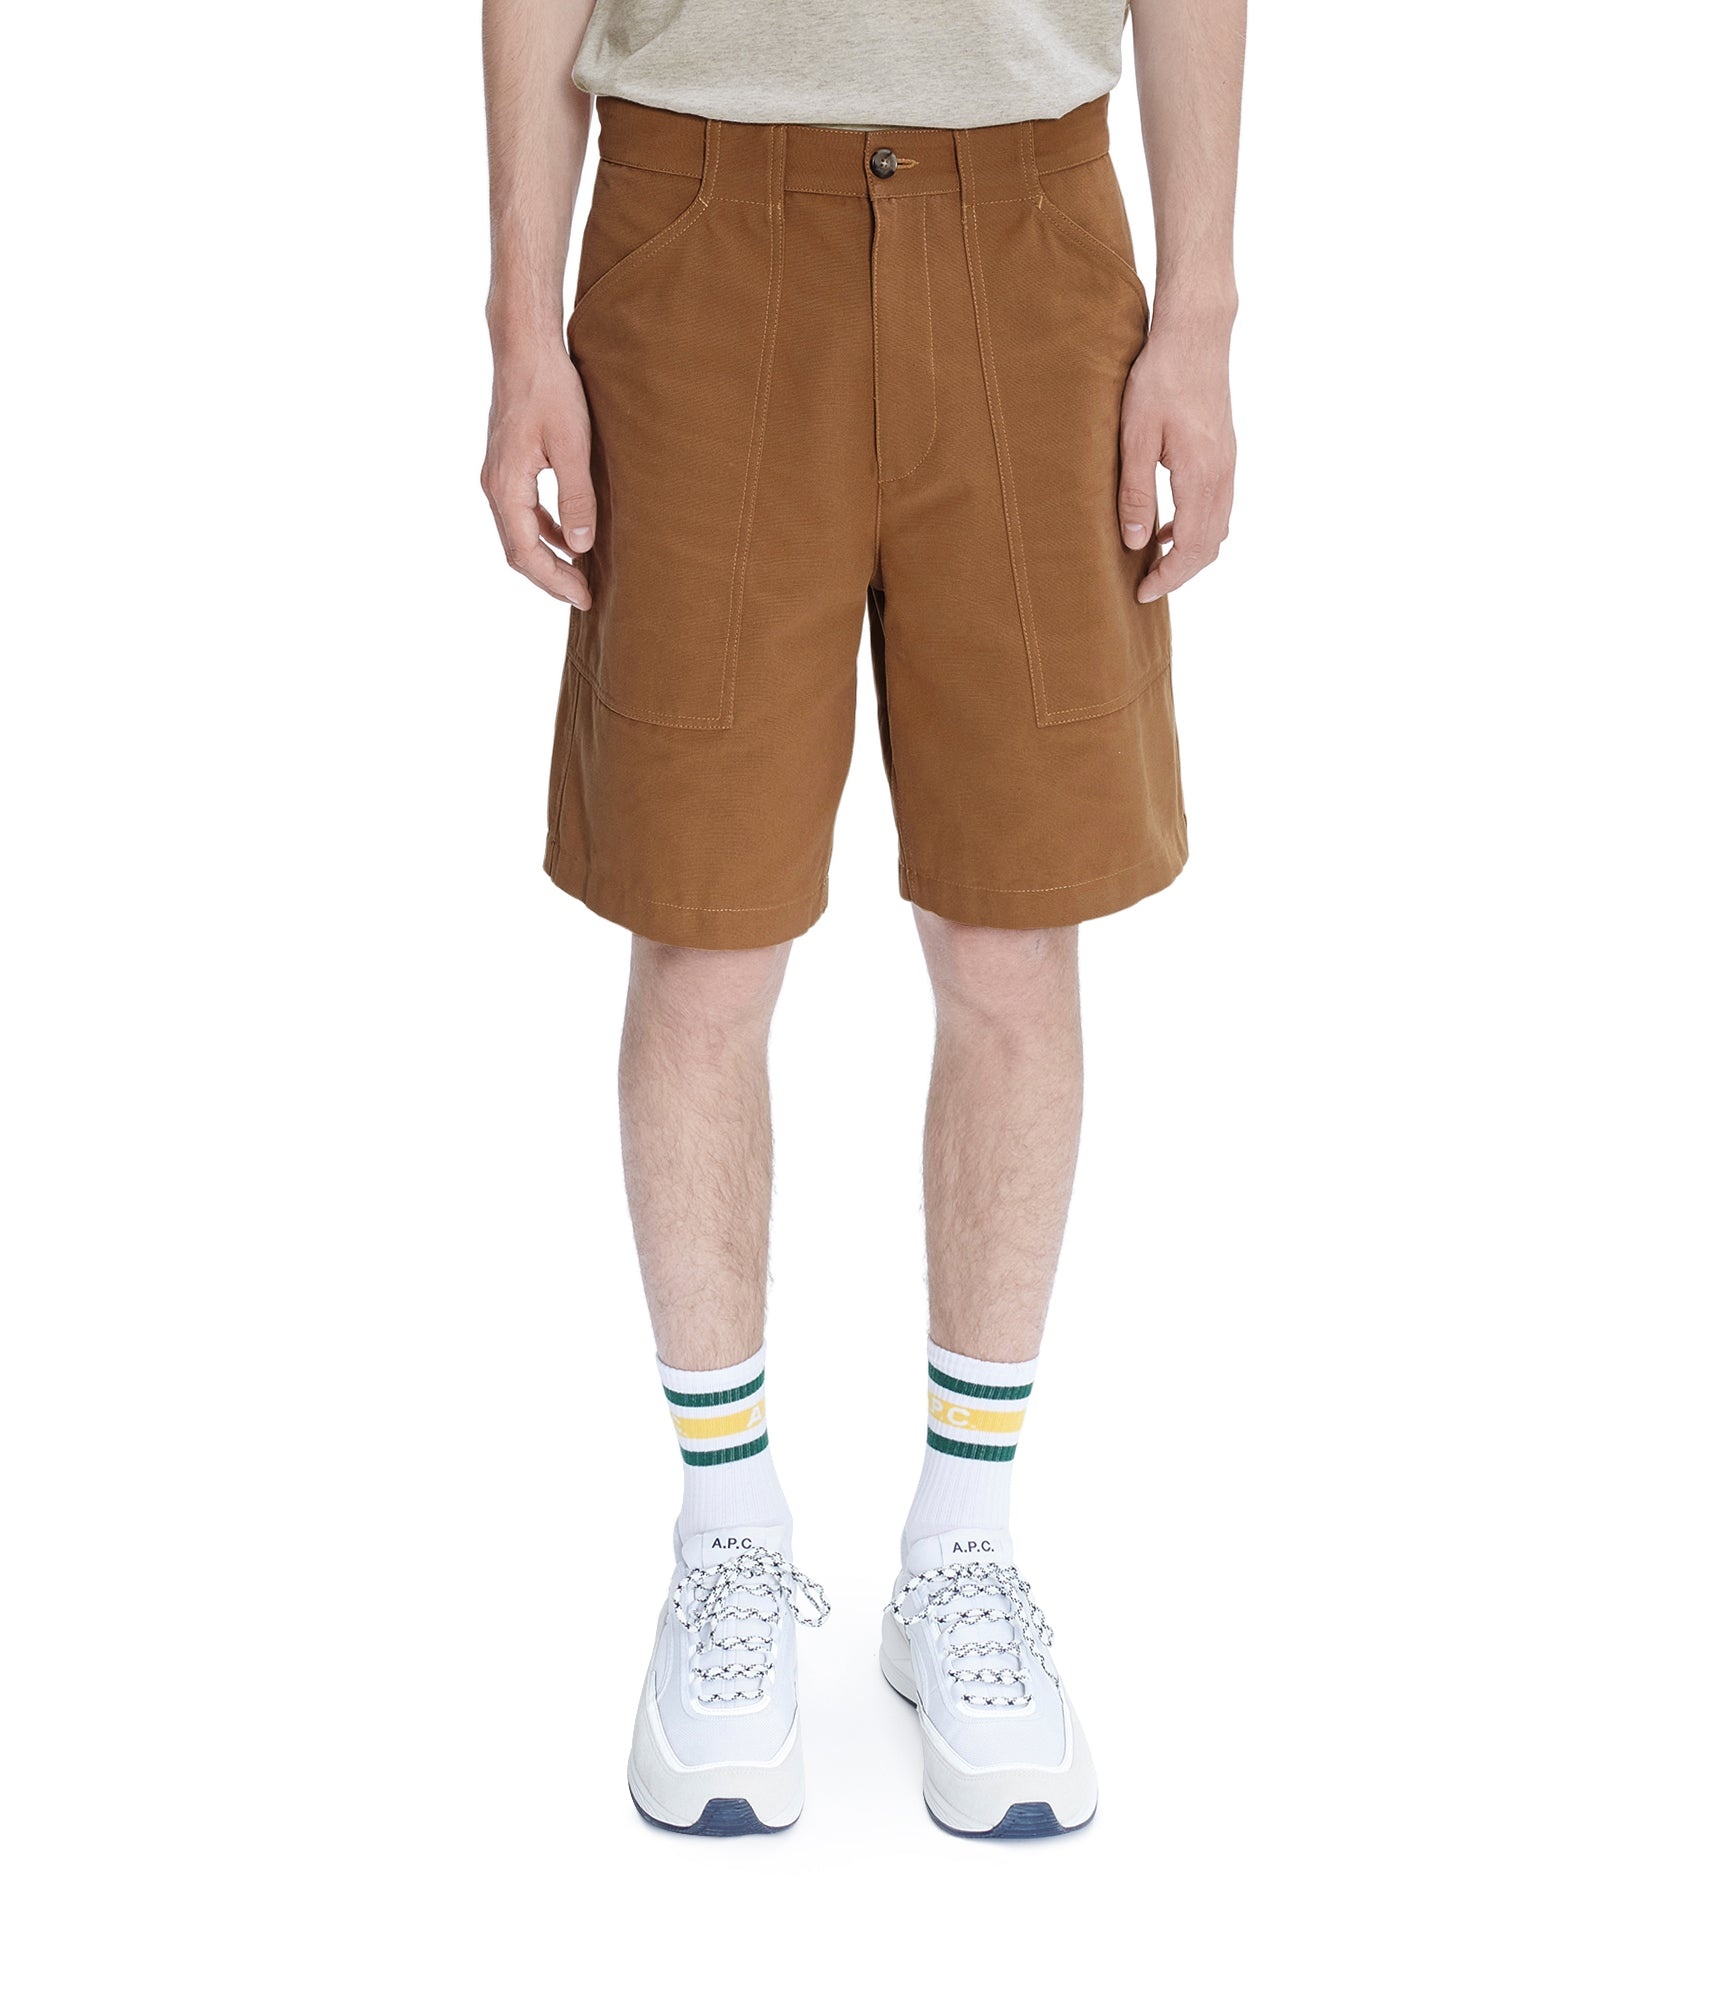 Melbourne shorts - 4